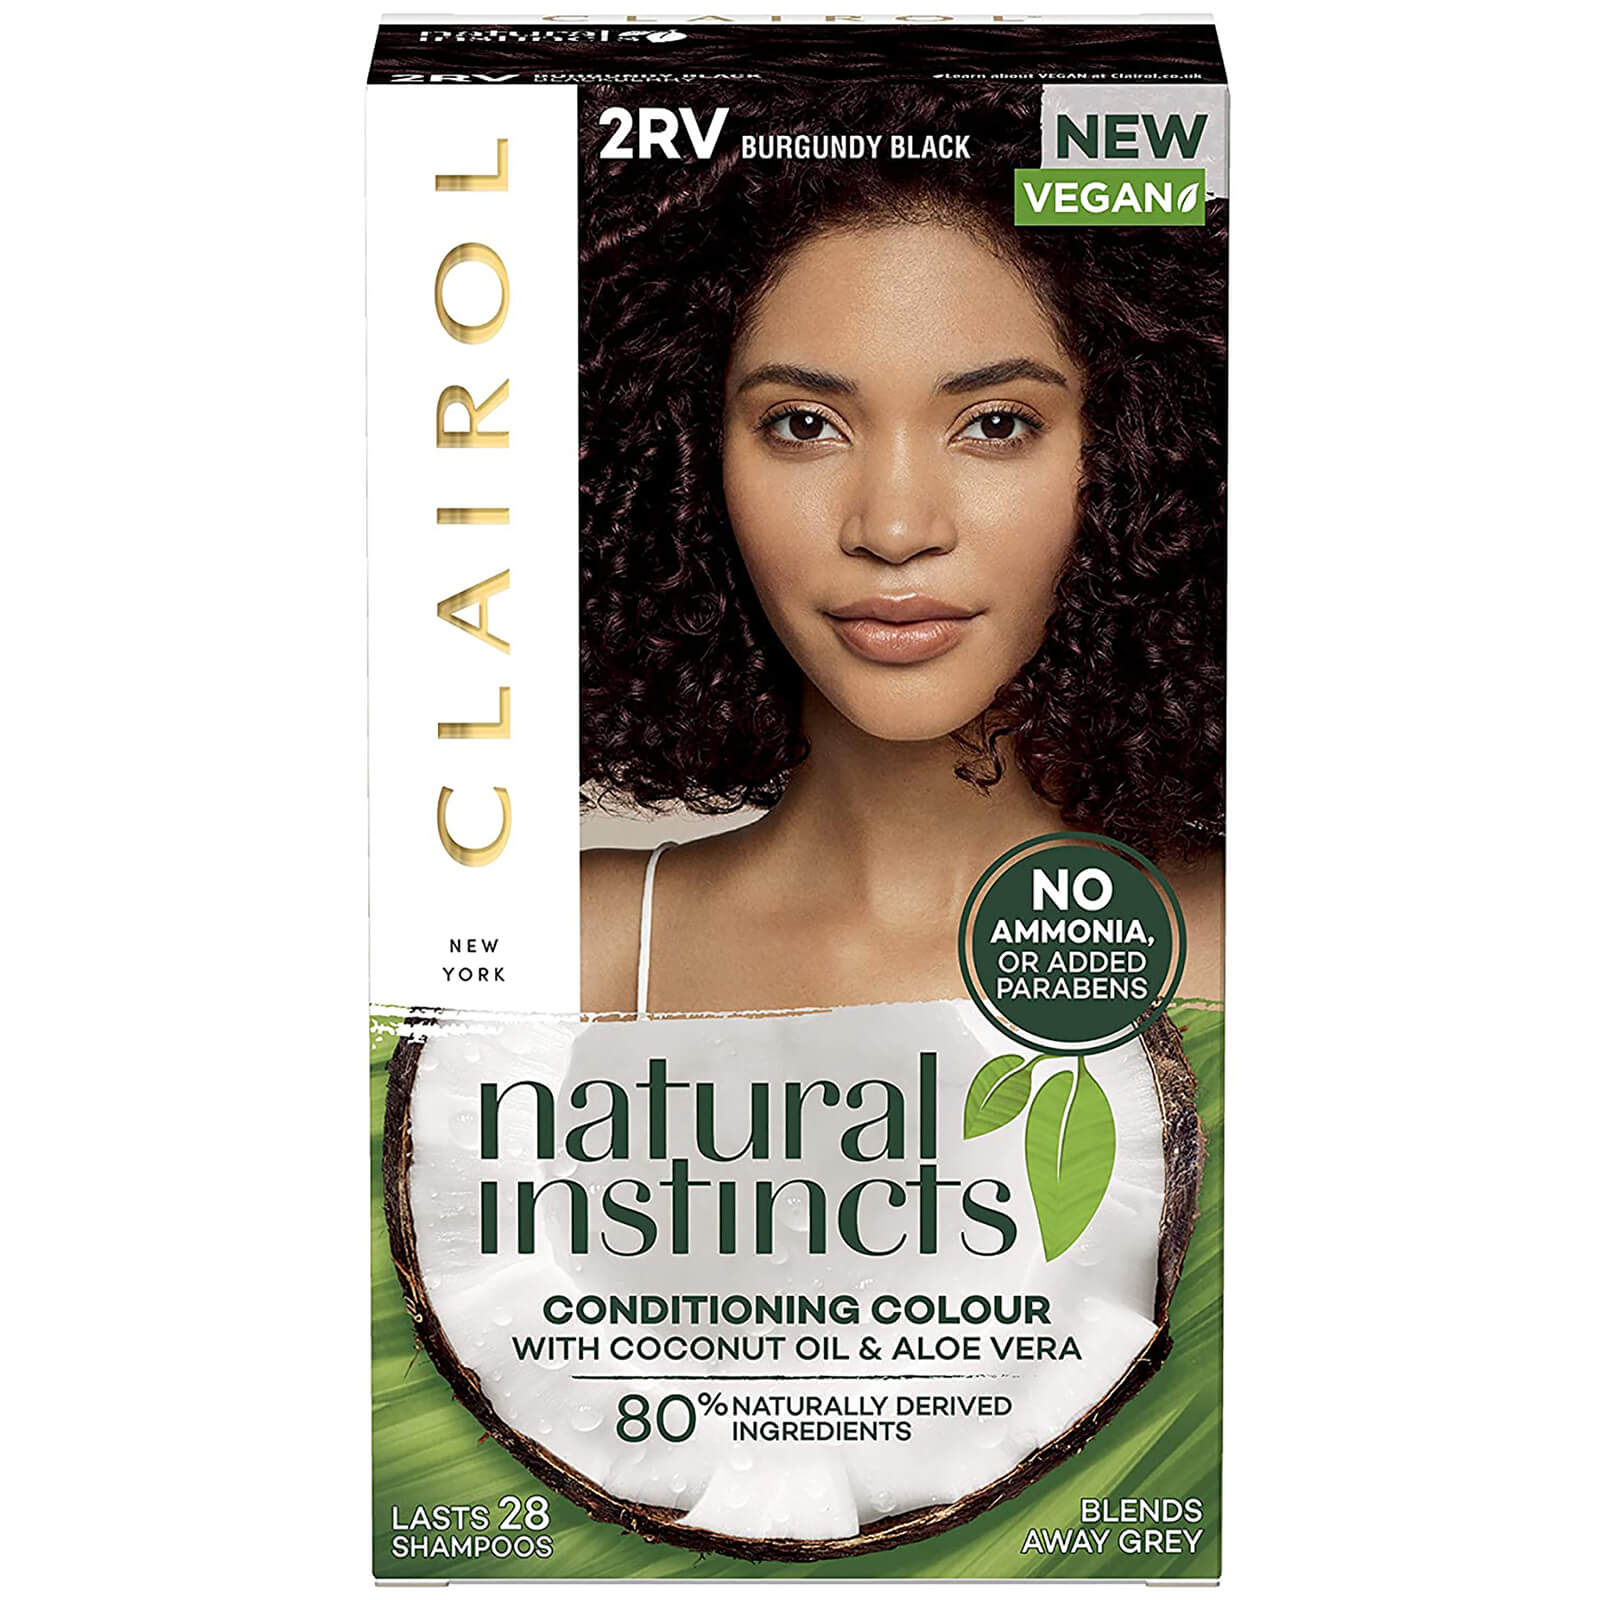 Clairol Natural Instincts Semi-Permanent No Ammonia Vegan Hair Dye 177ml (Various Shades) - 2RV Burgundy Black